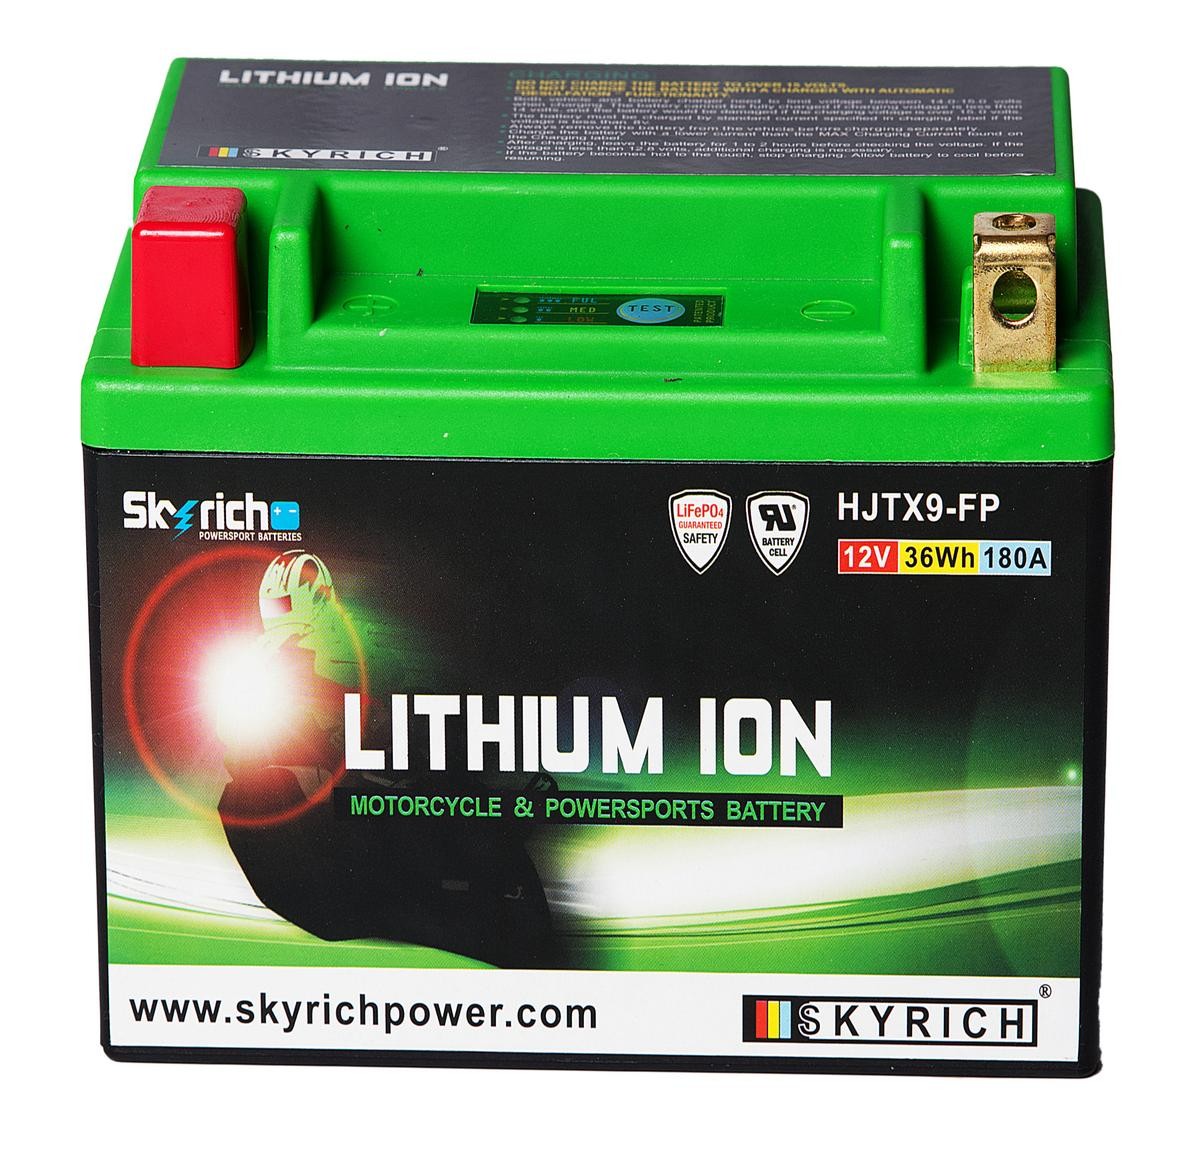 HUSABERG FE Batterie 12V 3Ah 180A N Li-Ionen-Batterie SKYRICH LITHIUM ION HJTX9-FP